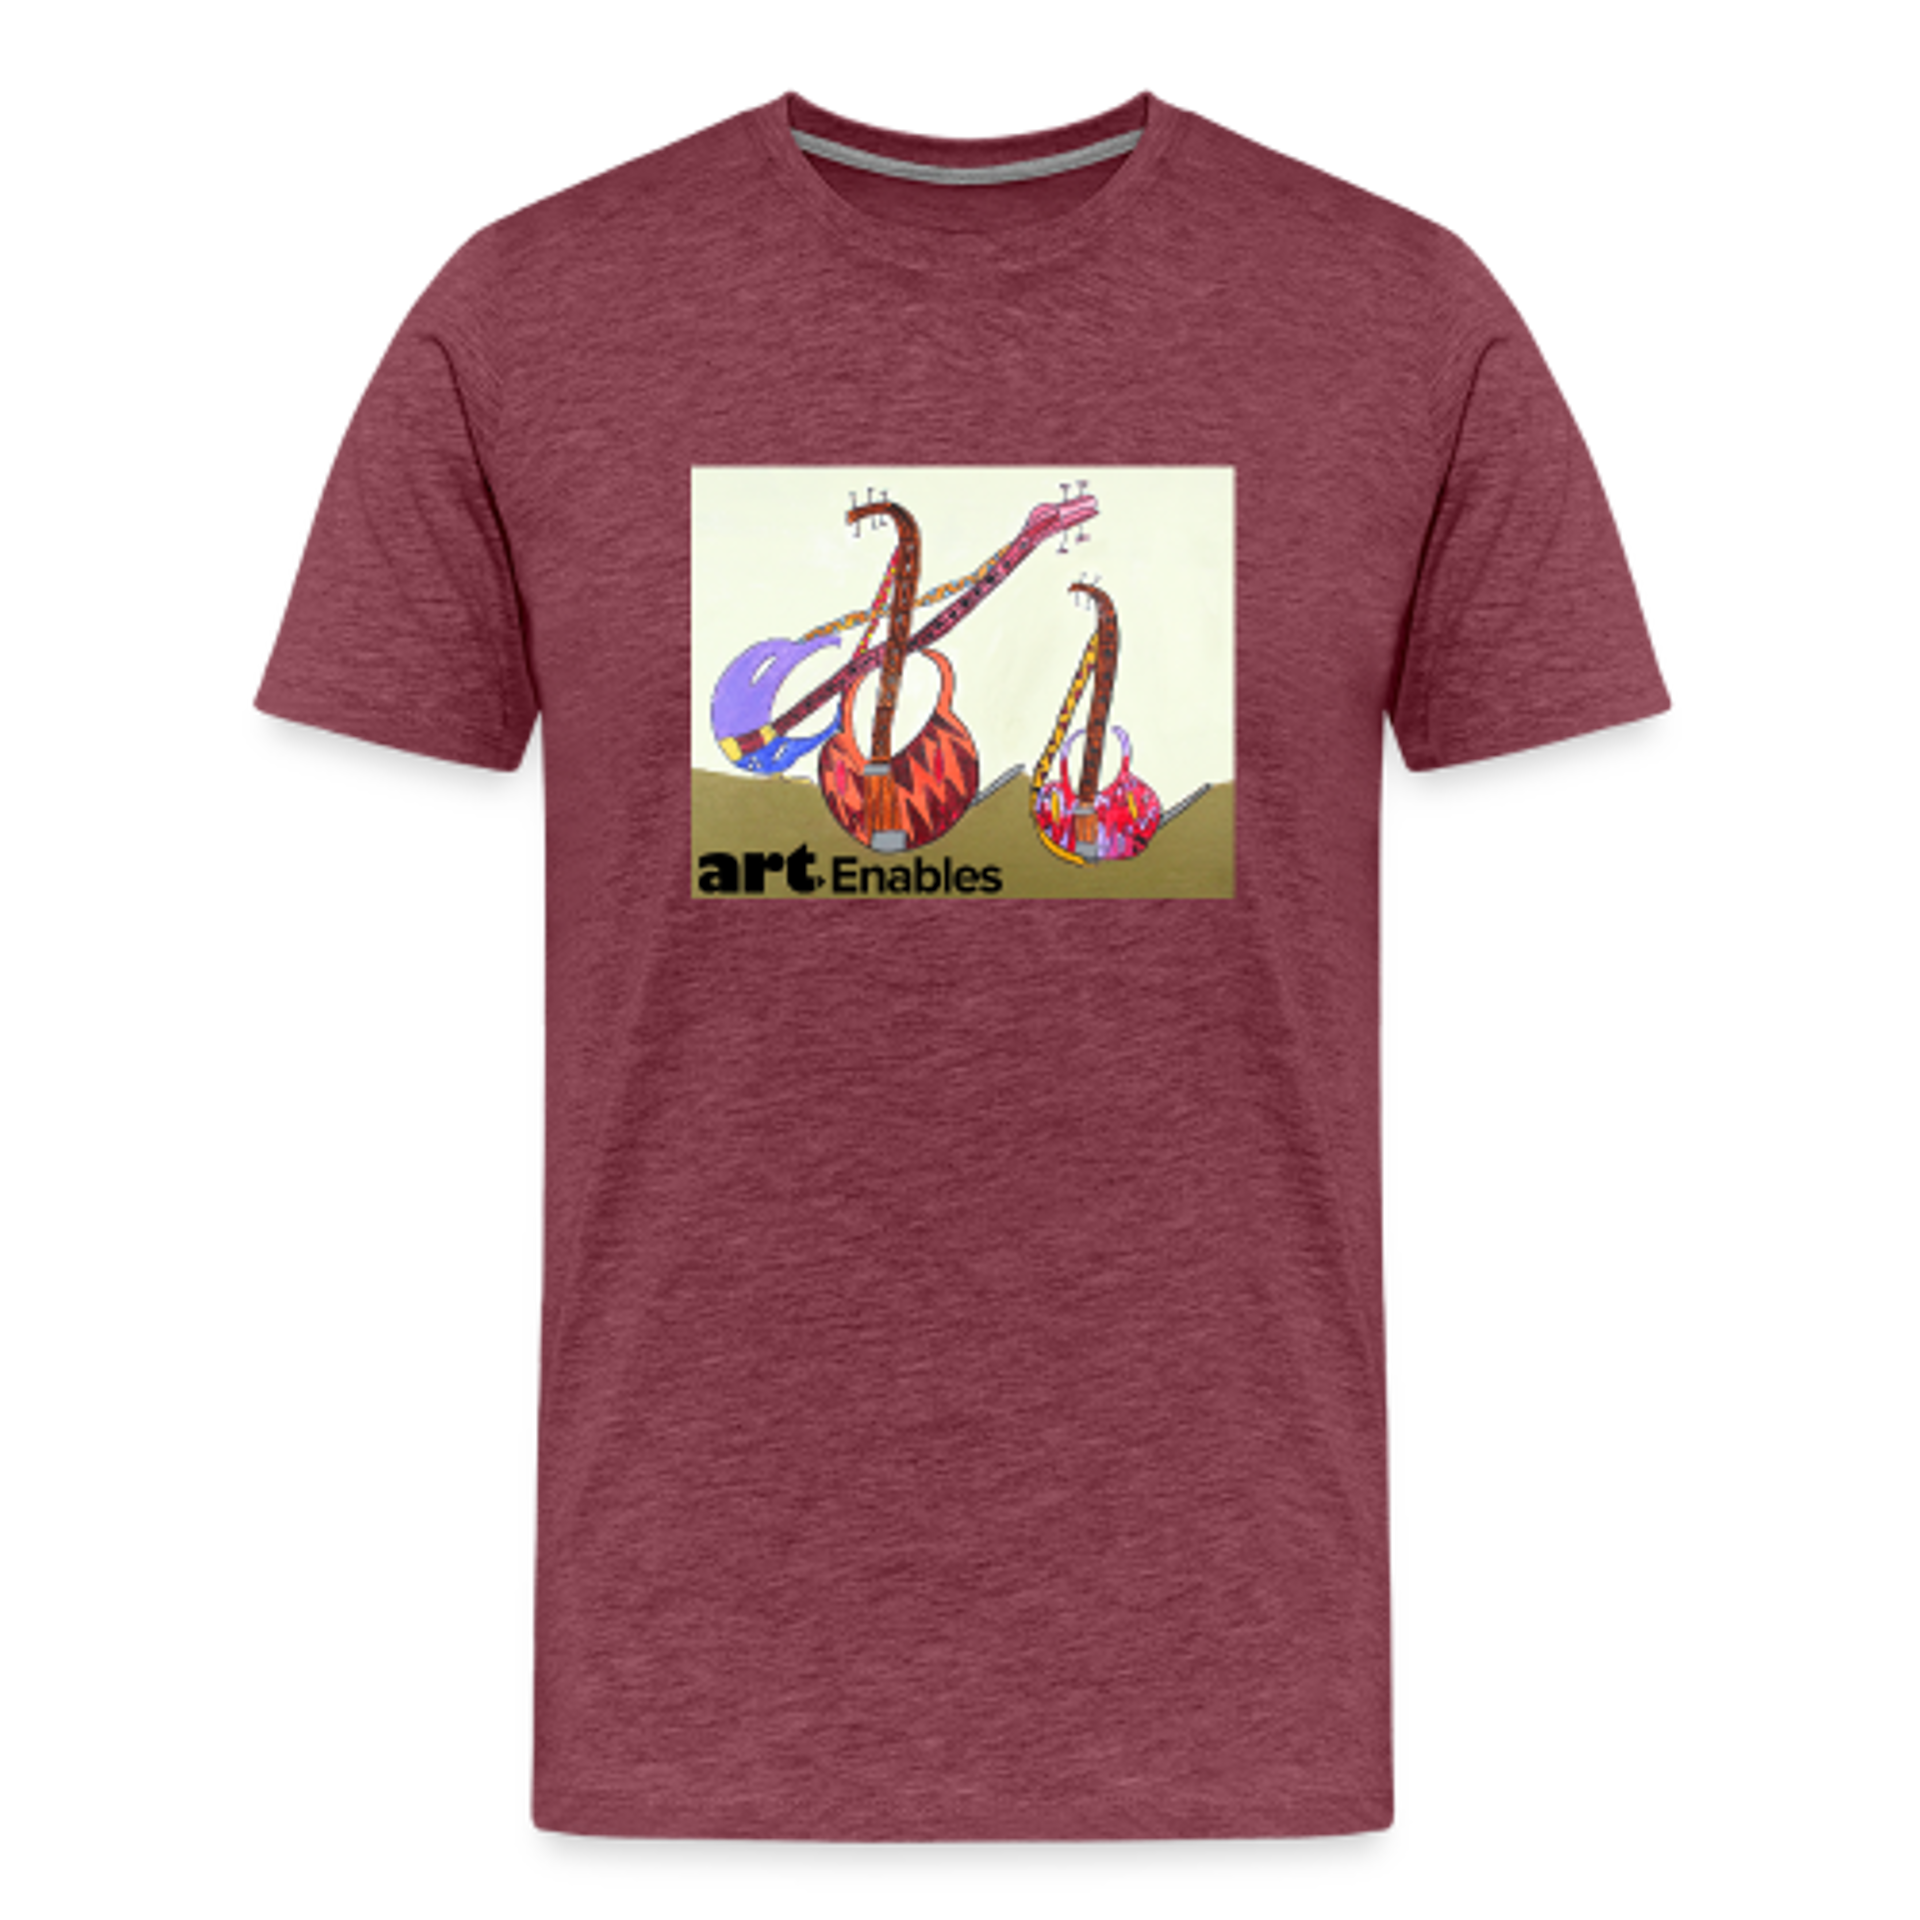 Men's T-shirt (artwork by Max Poznerzon) Large - heather burgundy by Art Enables Merchandise